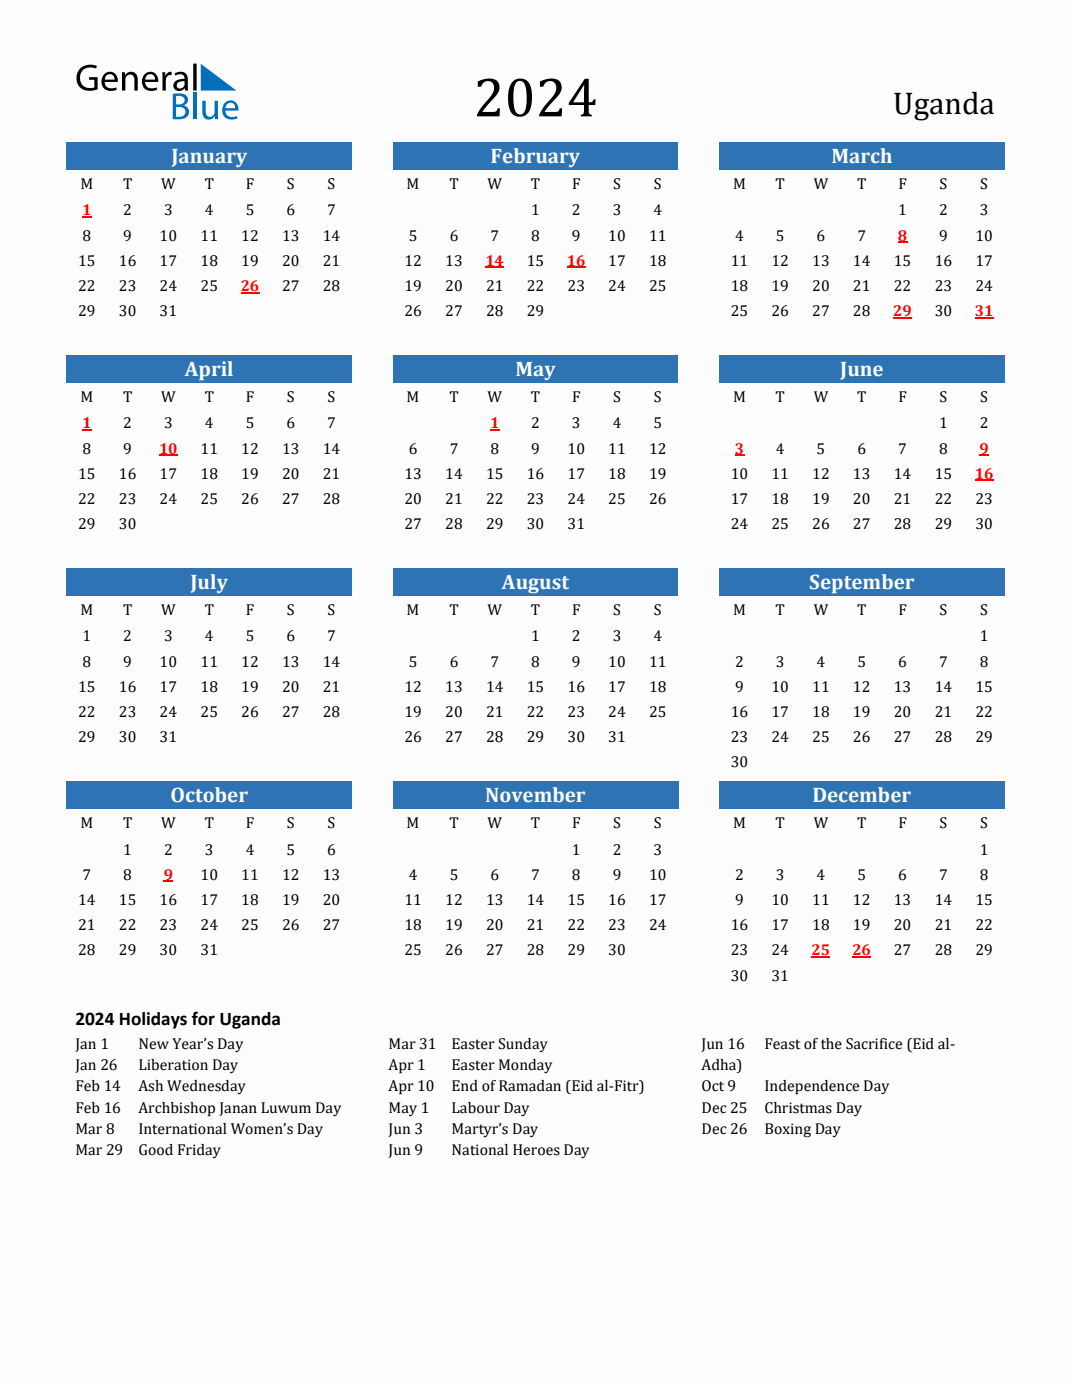 2024 Holiday Calendar for Uganda Monday Start